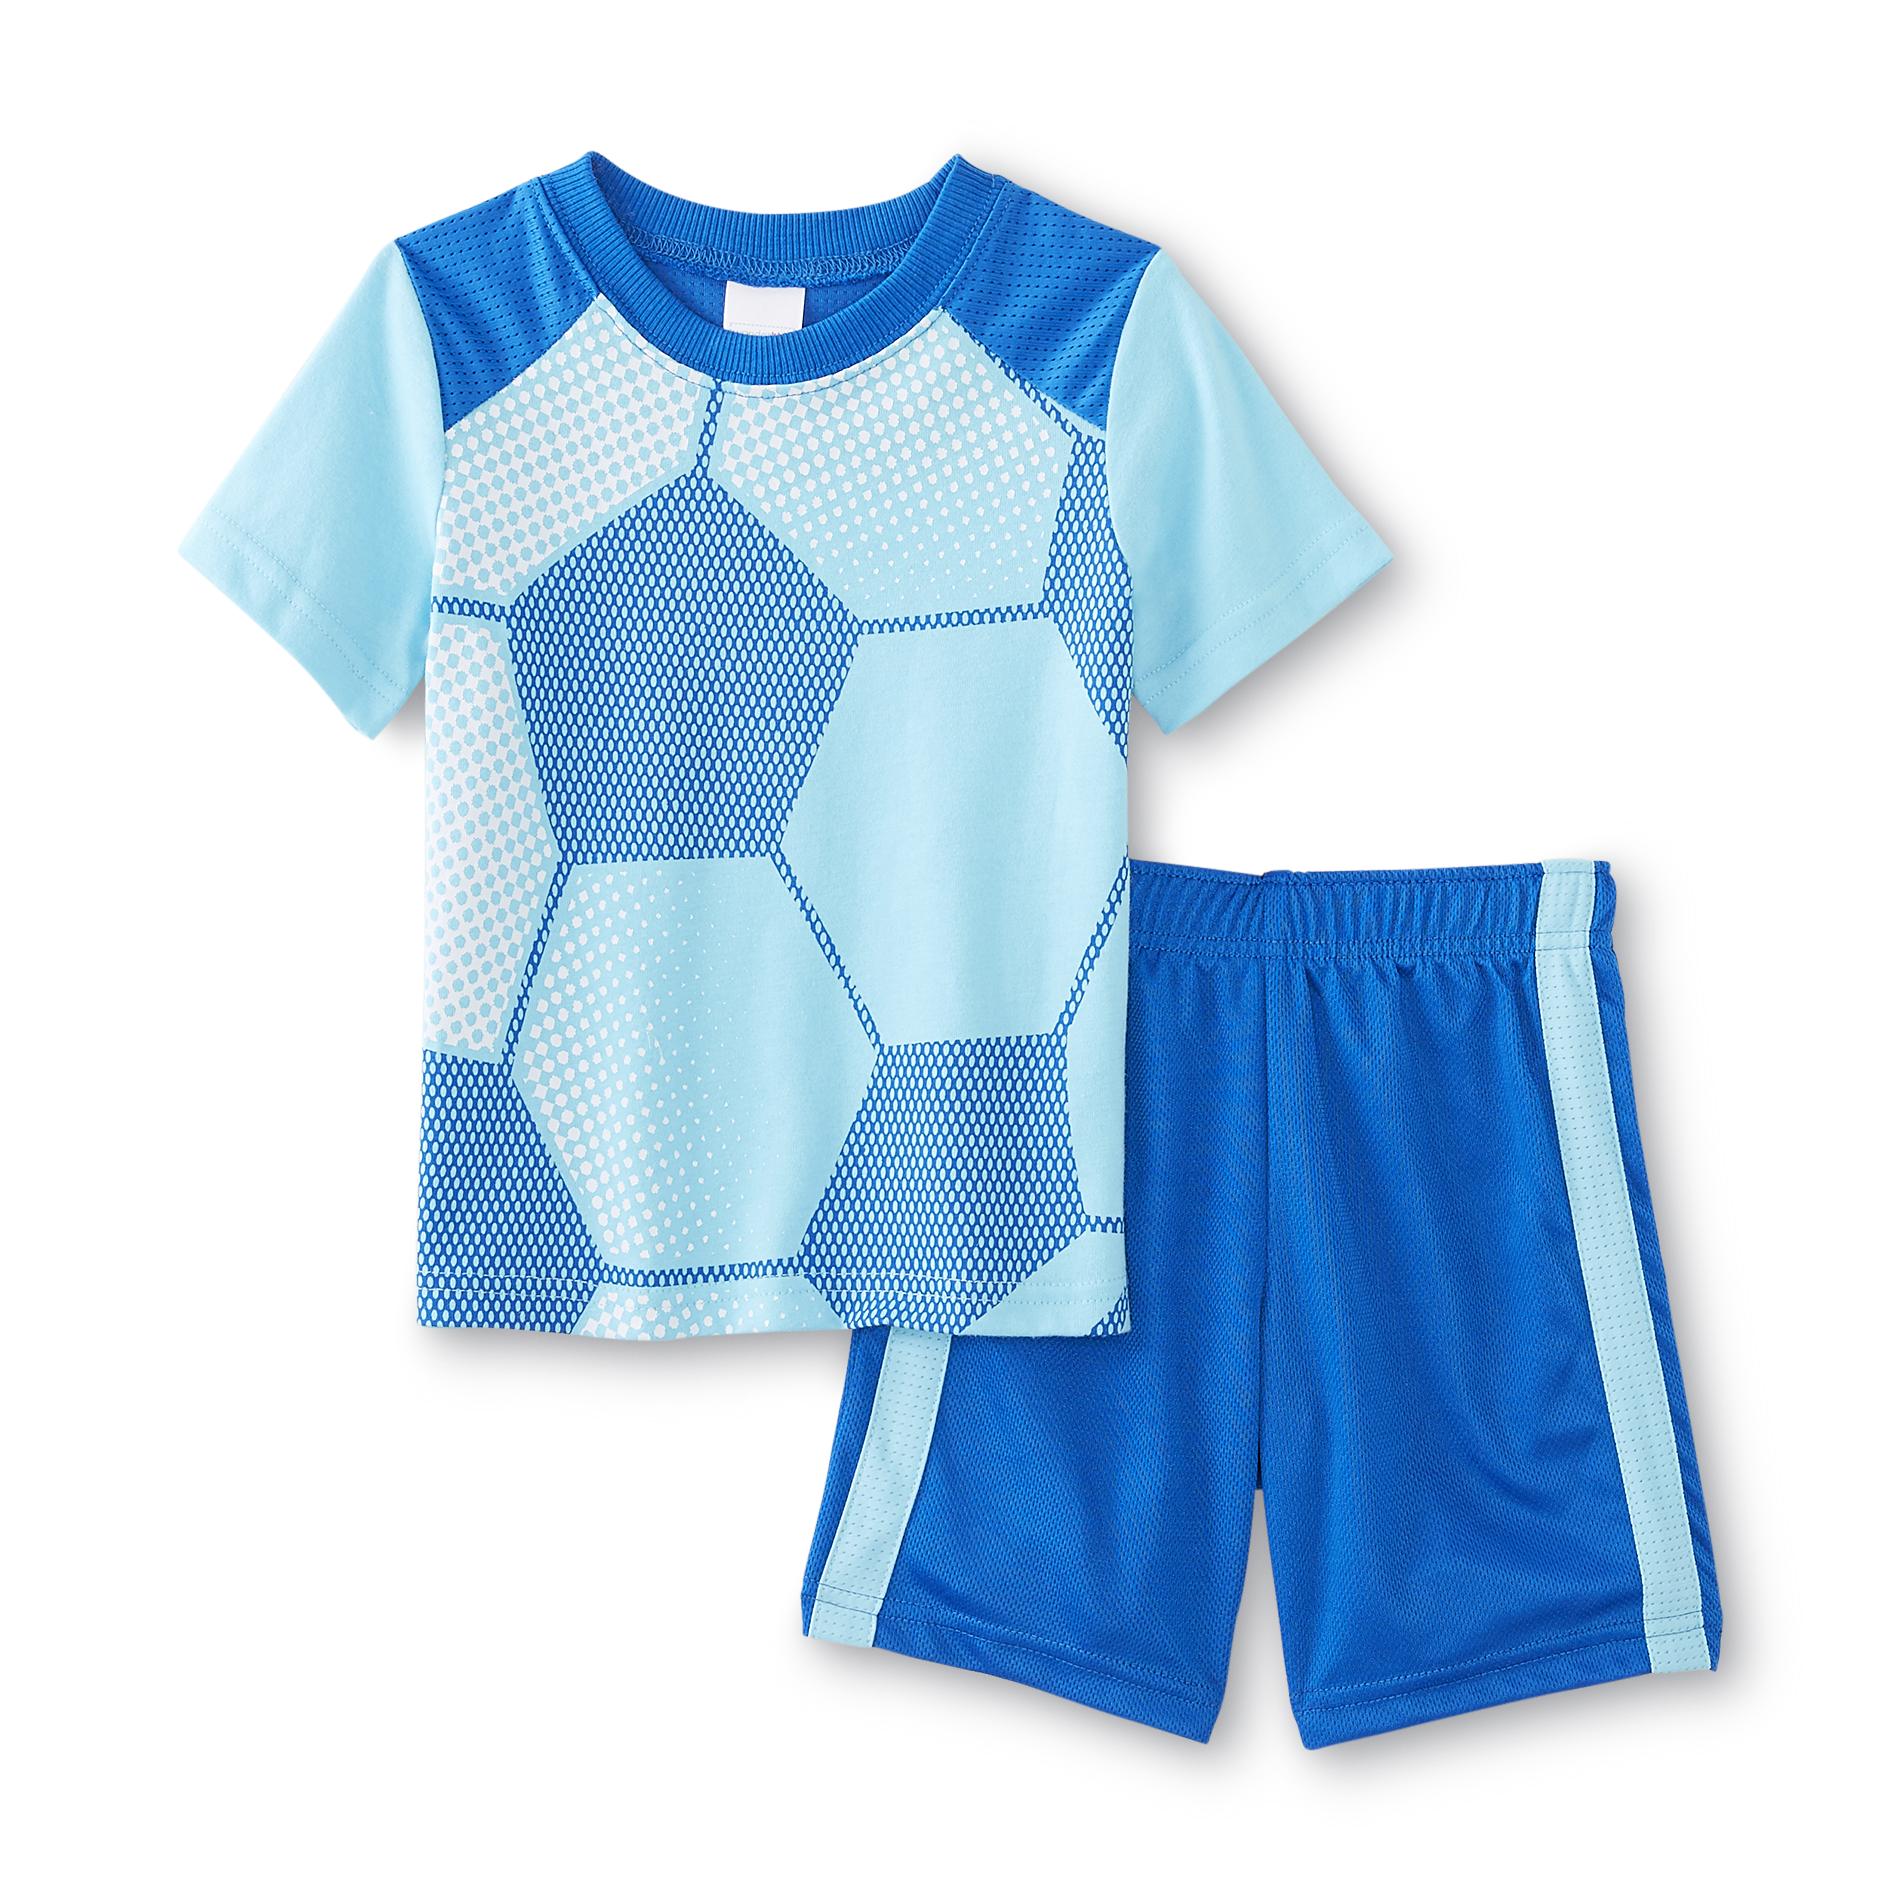 Infant & Toddler Boy's T-Shirt & Athletic Shorts - Soccer